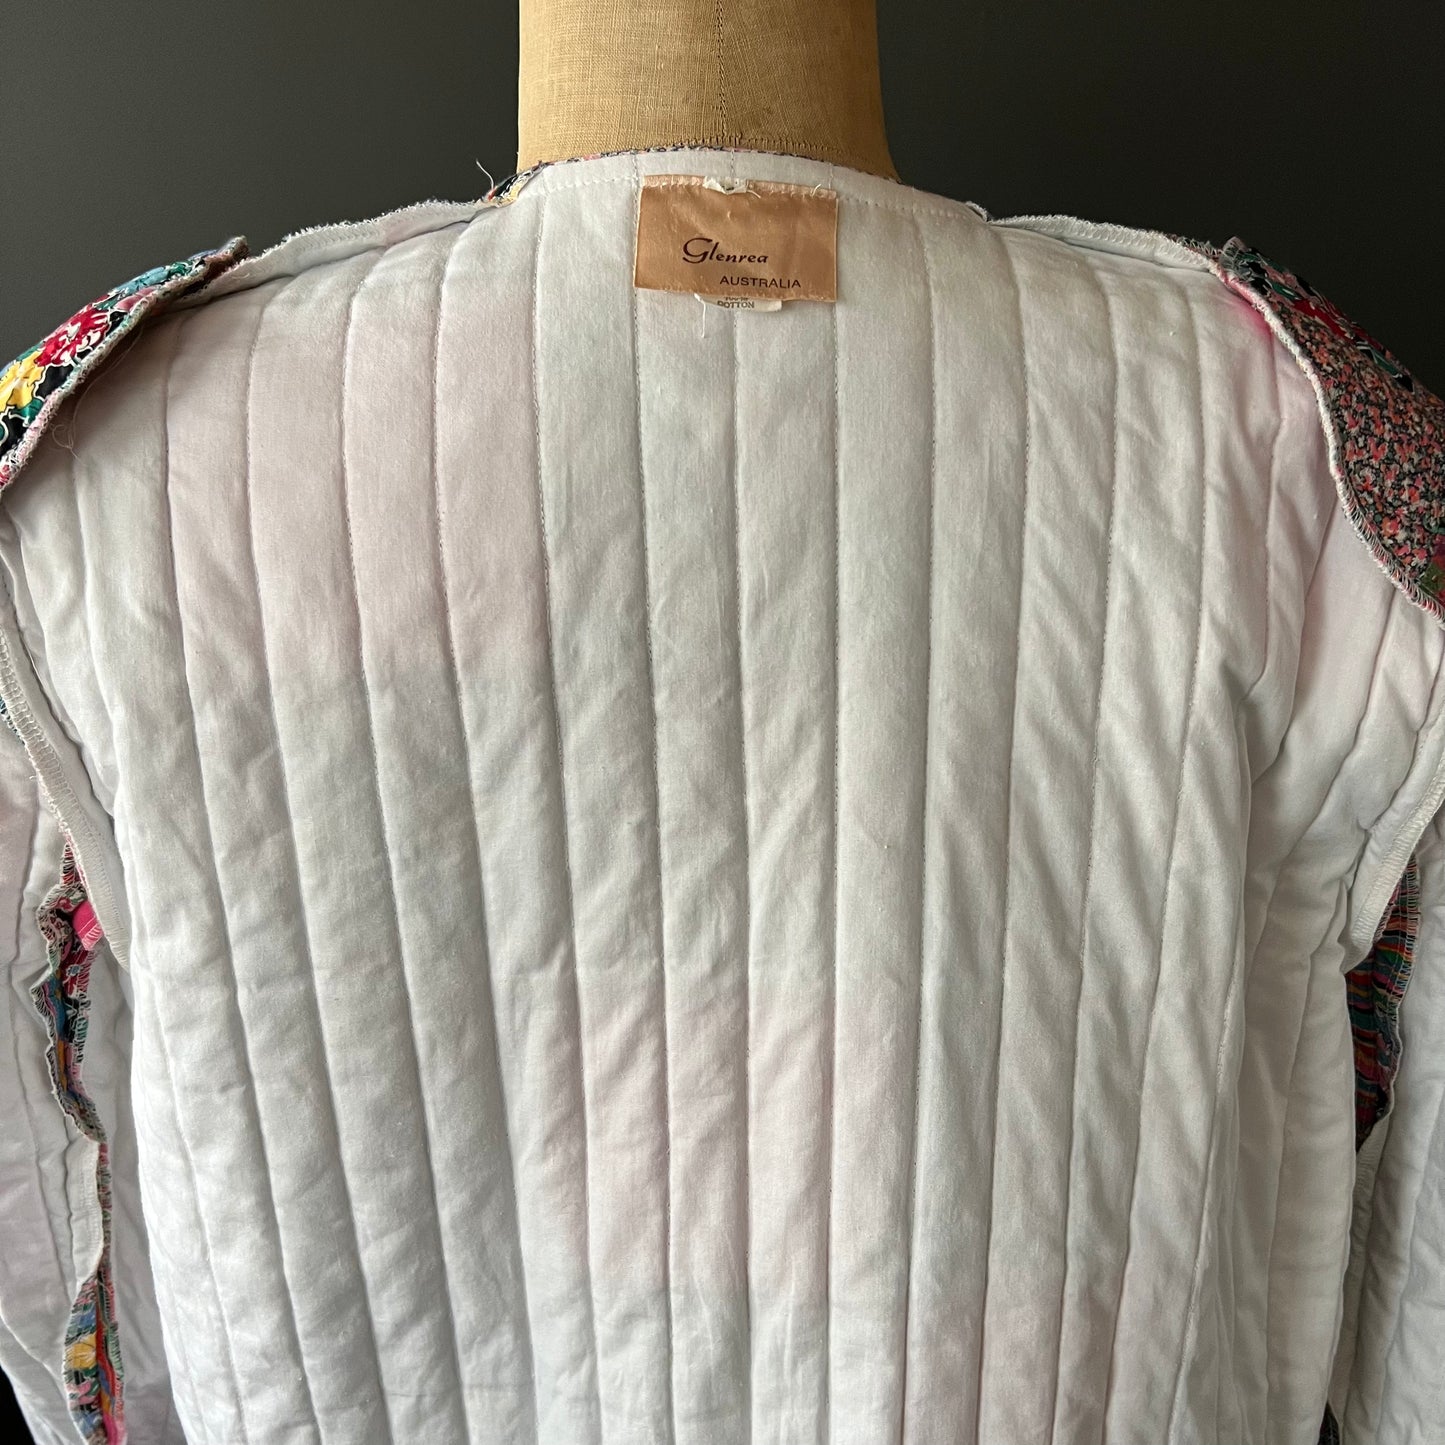 Vintage Glenrea Australia Cotton Quilted Patchwork Liberty Prints Jacket